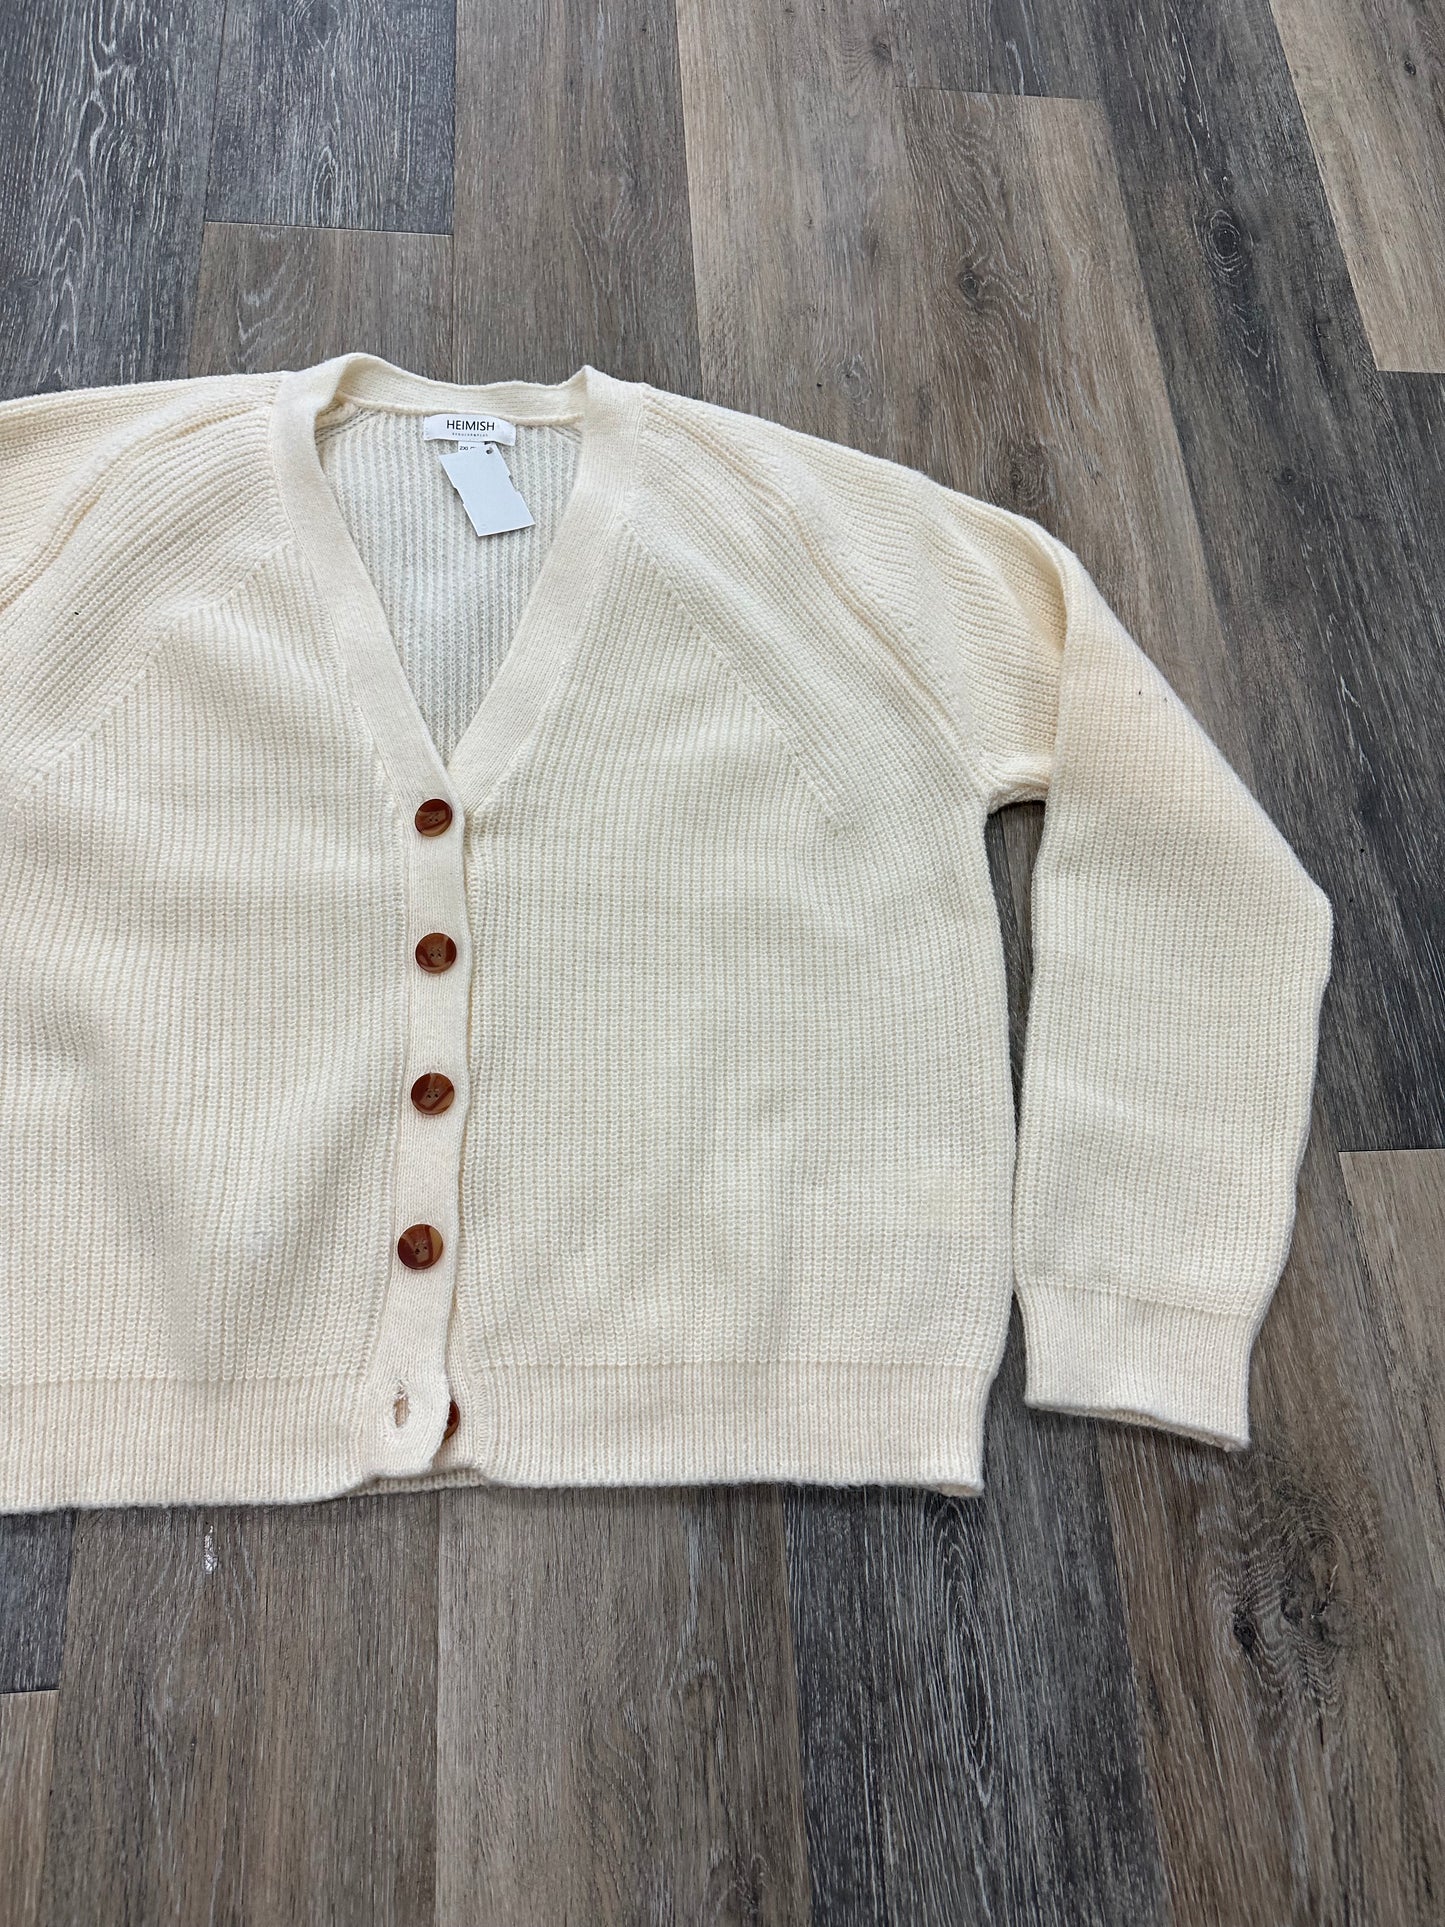 Sweater Cardigan By Heimish Usa  Size: 2x